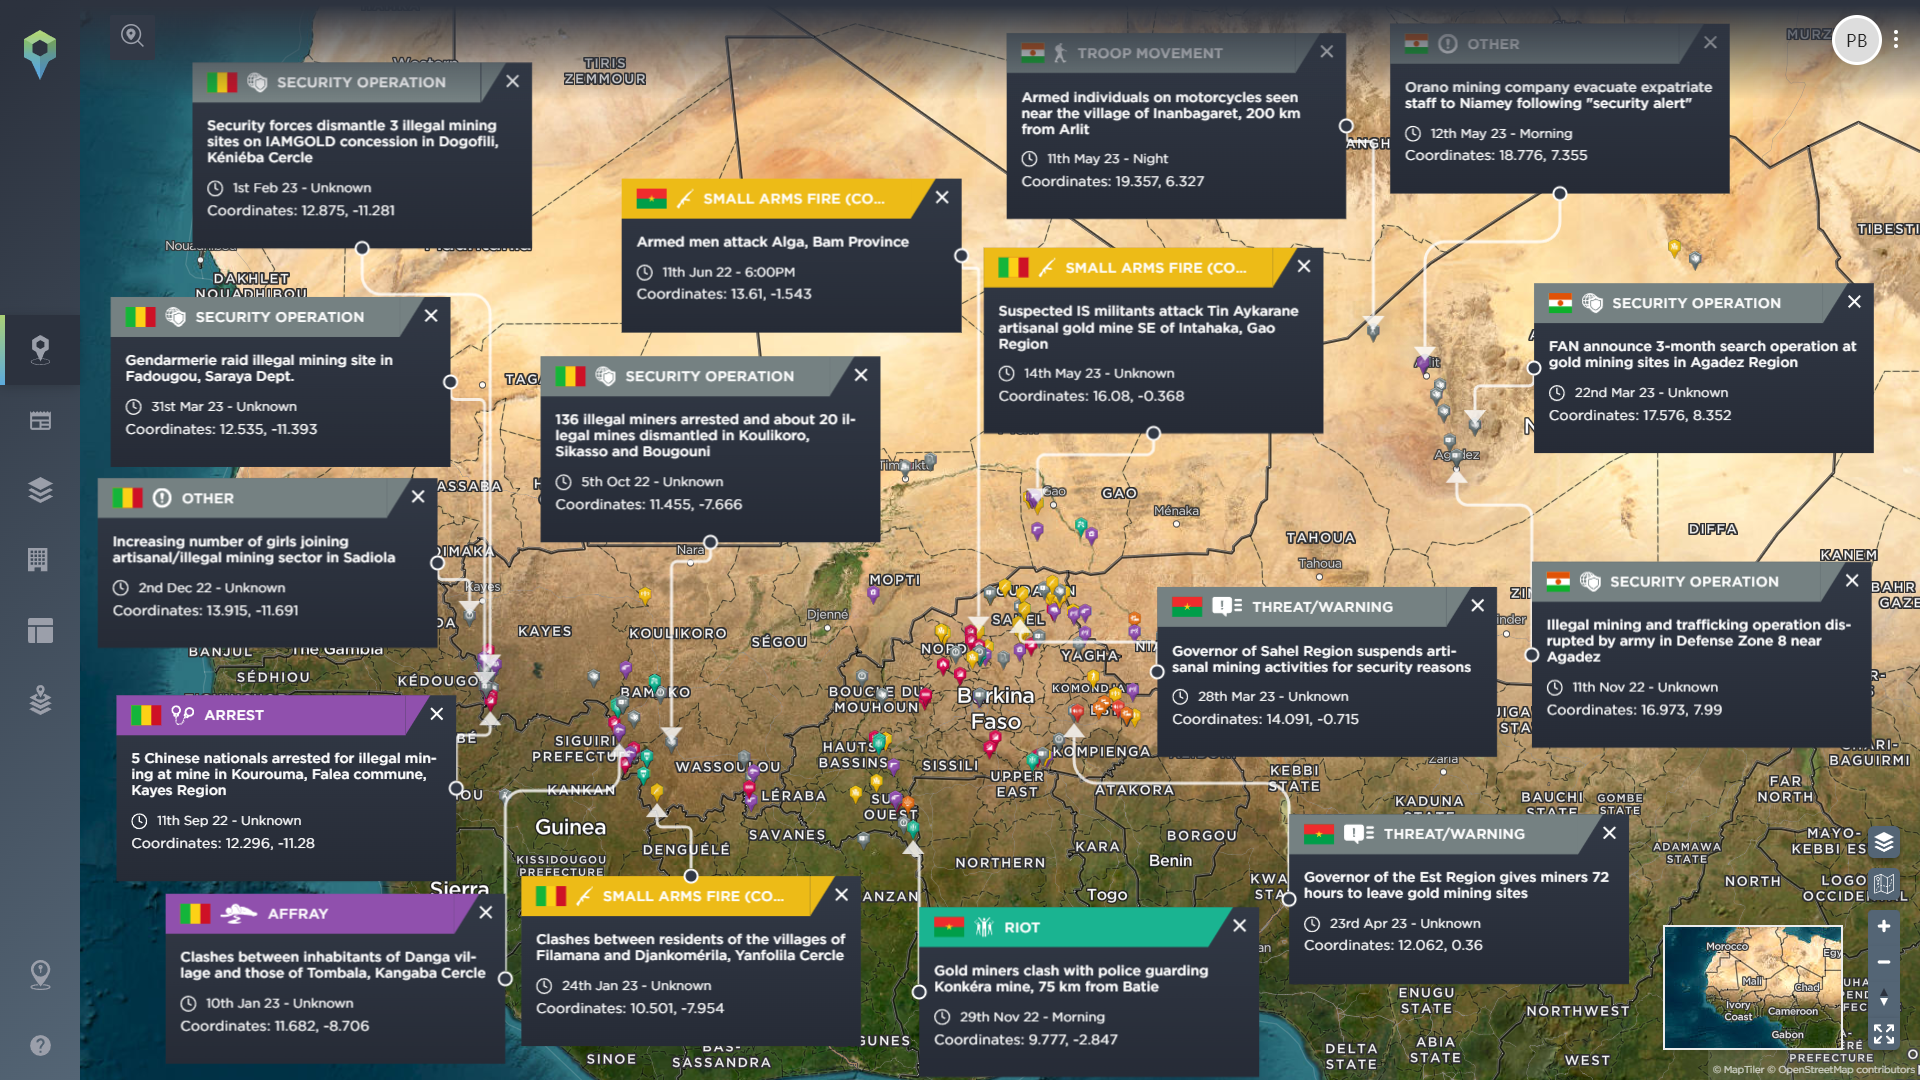 Illegal mining incidents in Sahel